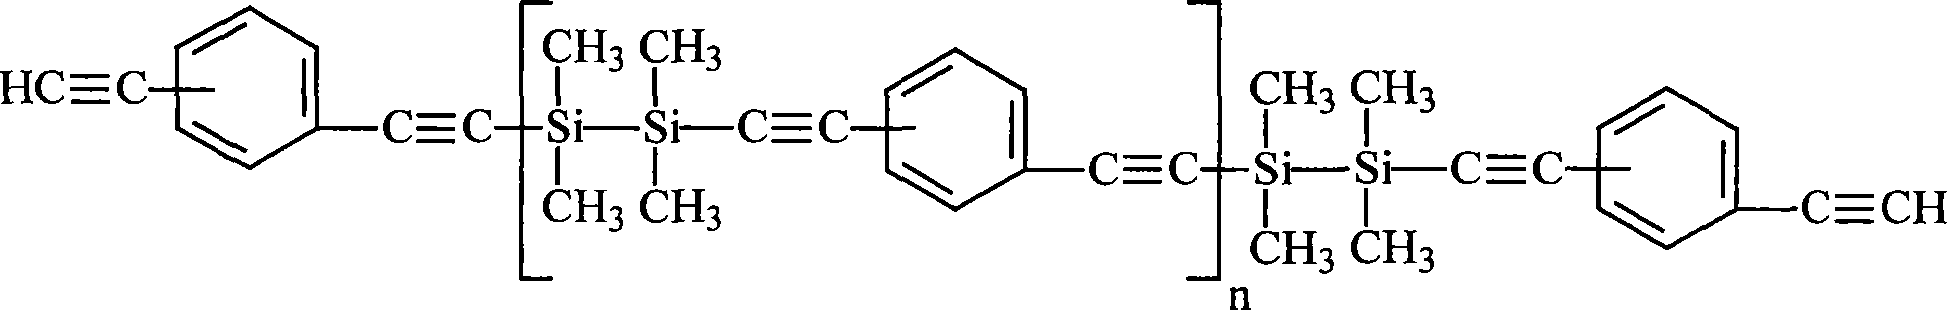 Aryne resin containing polysilicone and preparation method thereof